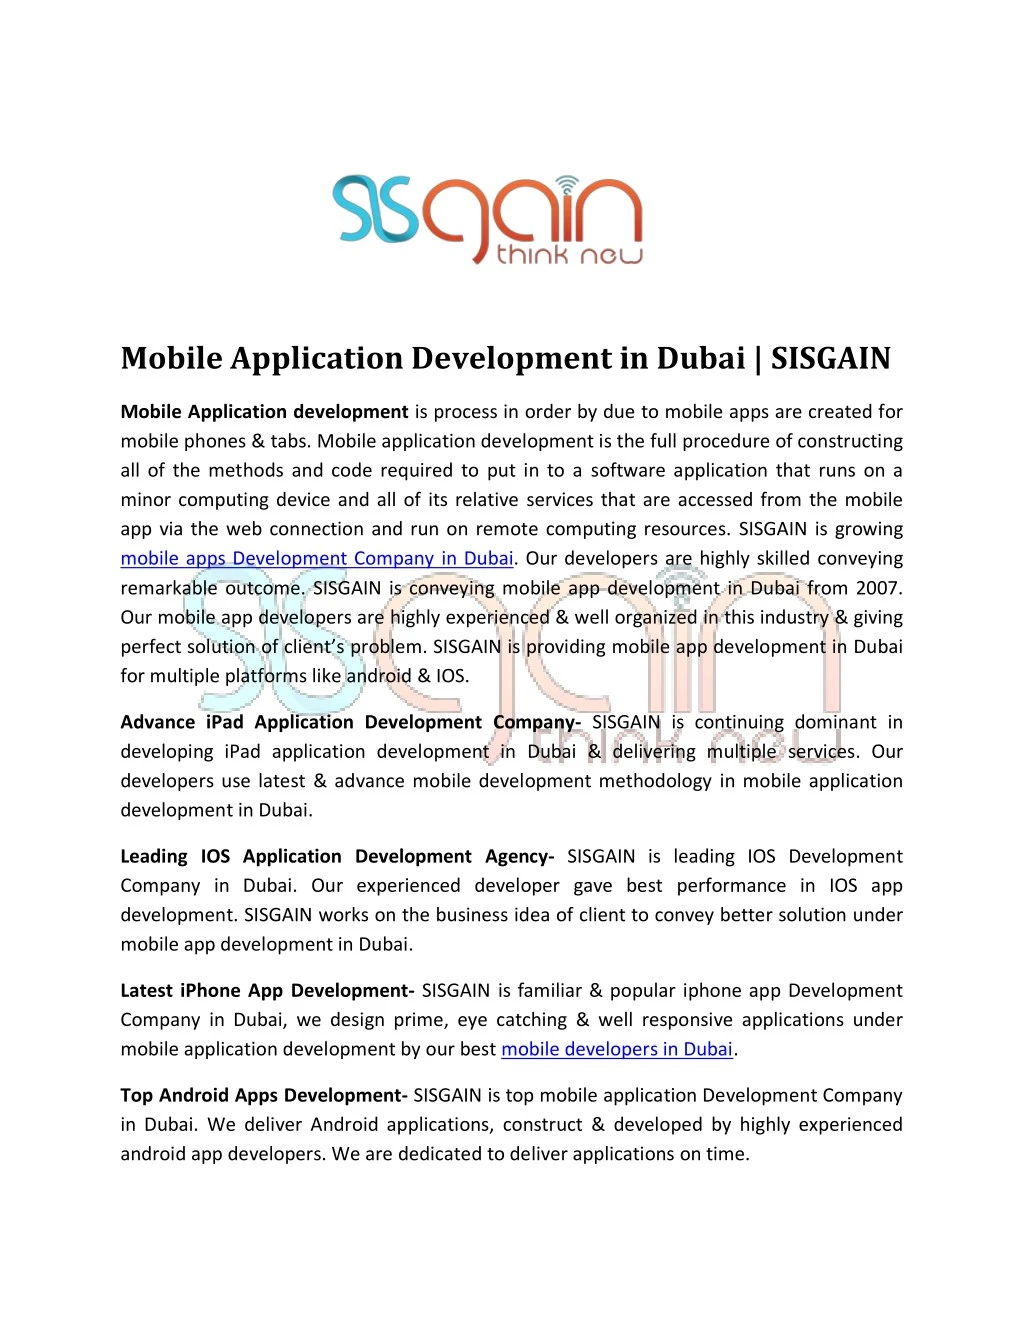 mobile application development in dubai sisgain n.